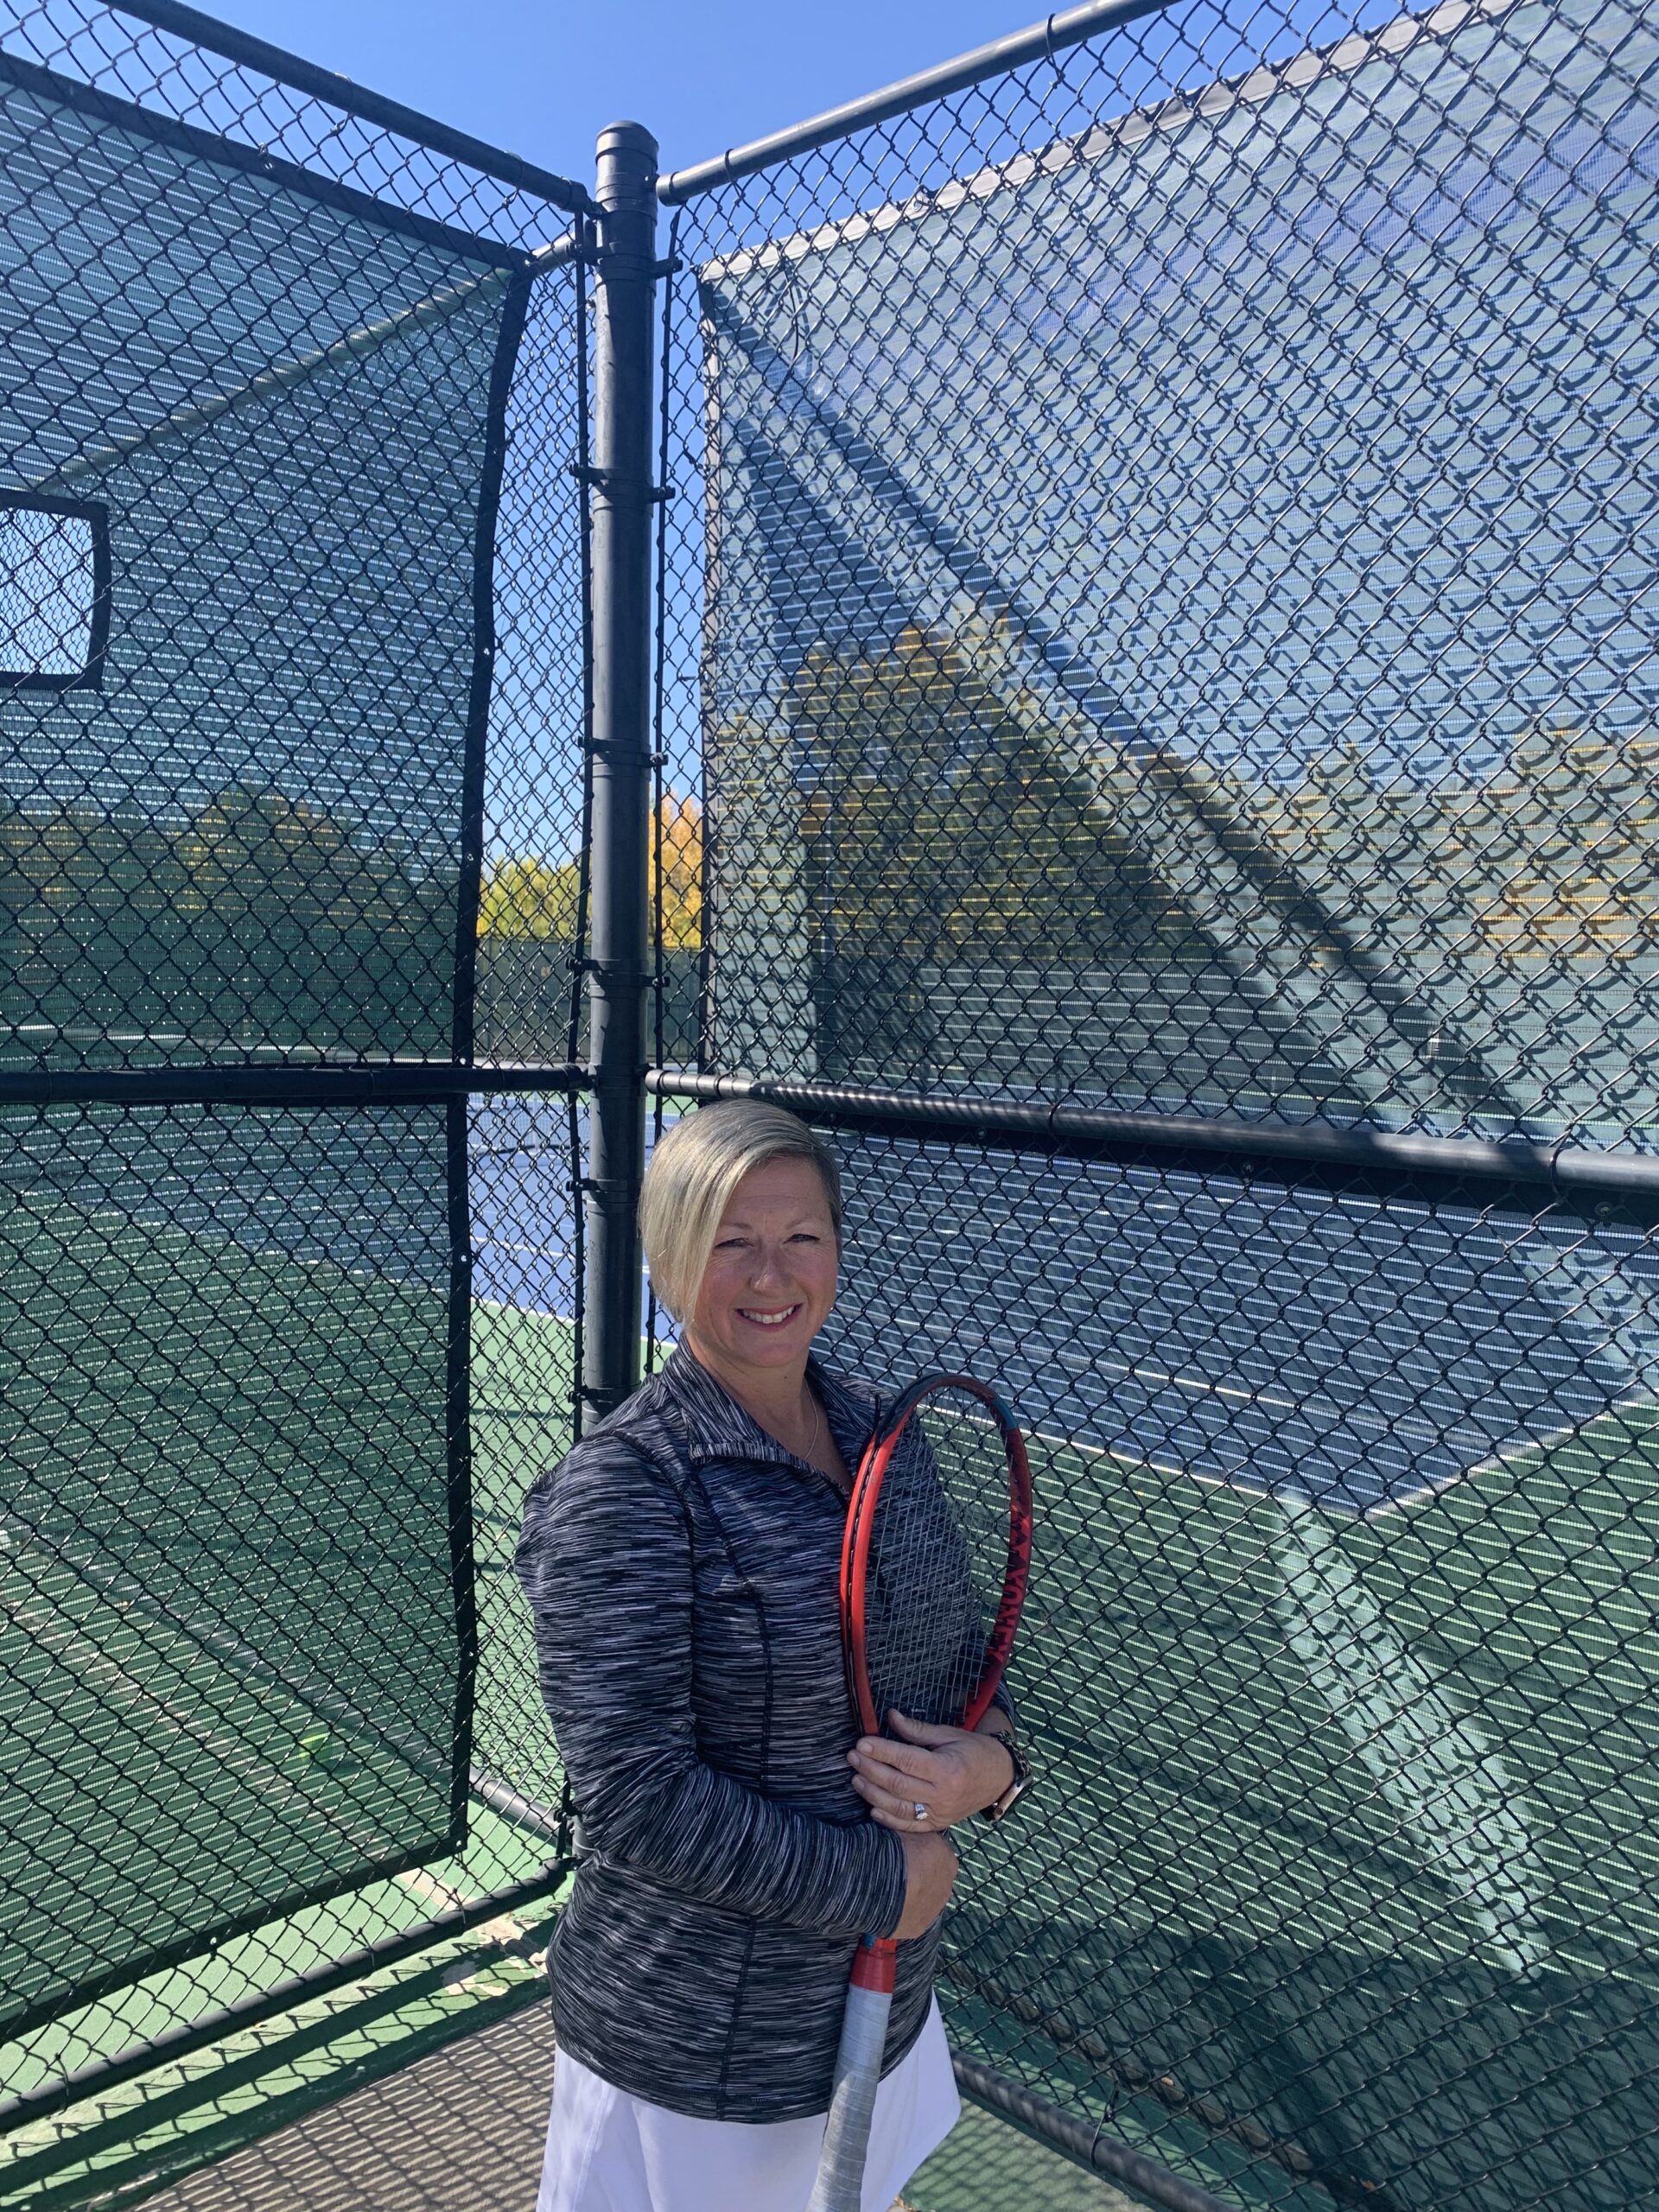 tennis lessons in denver